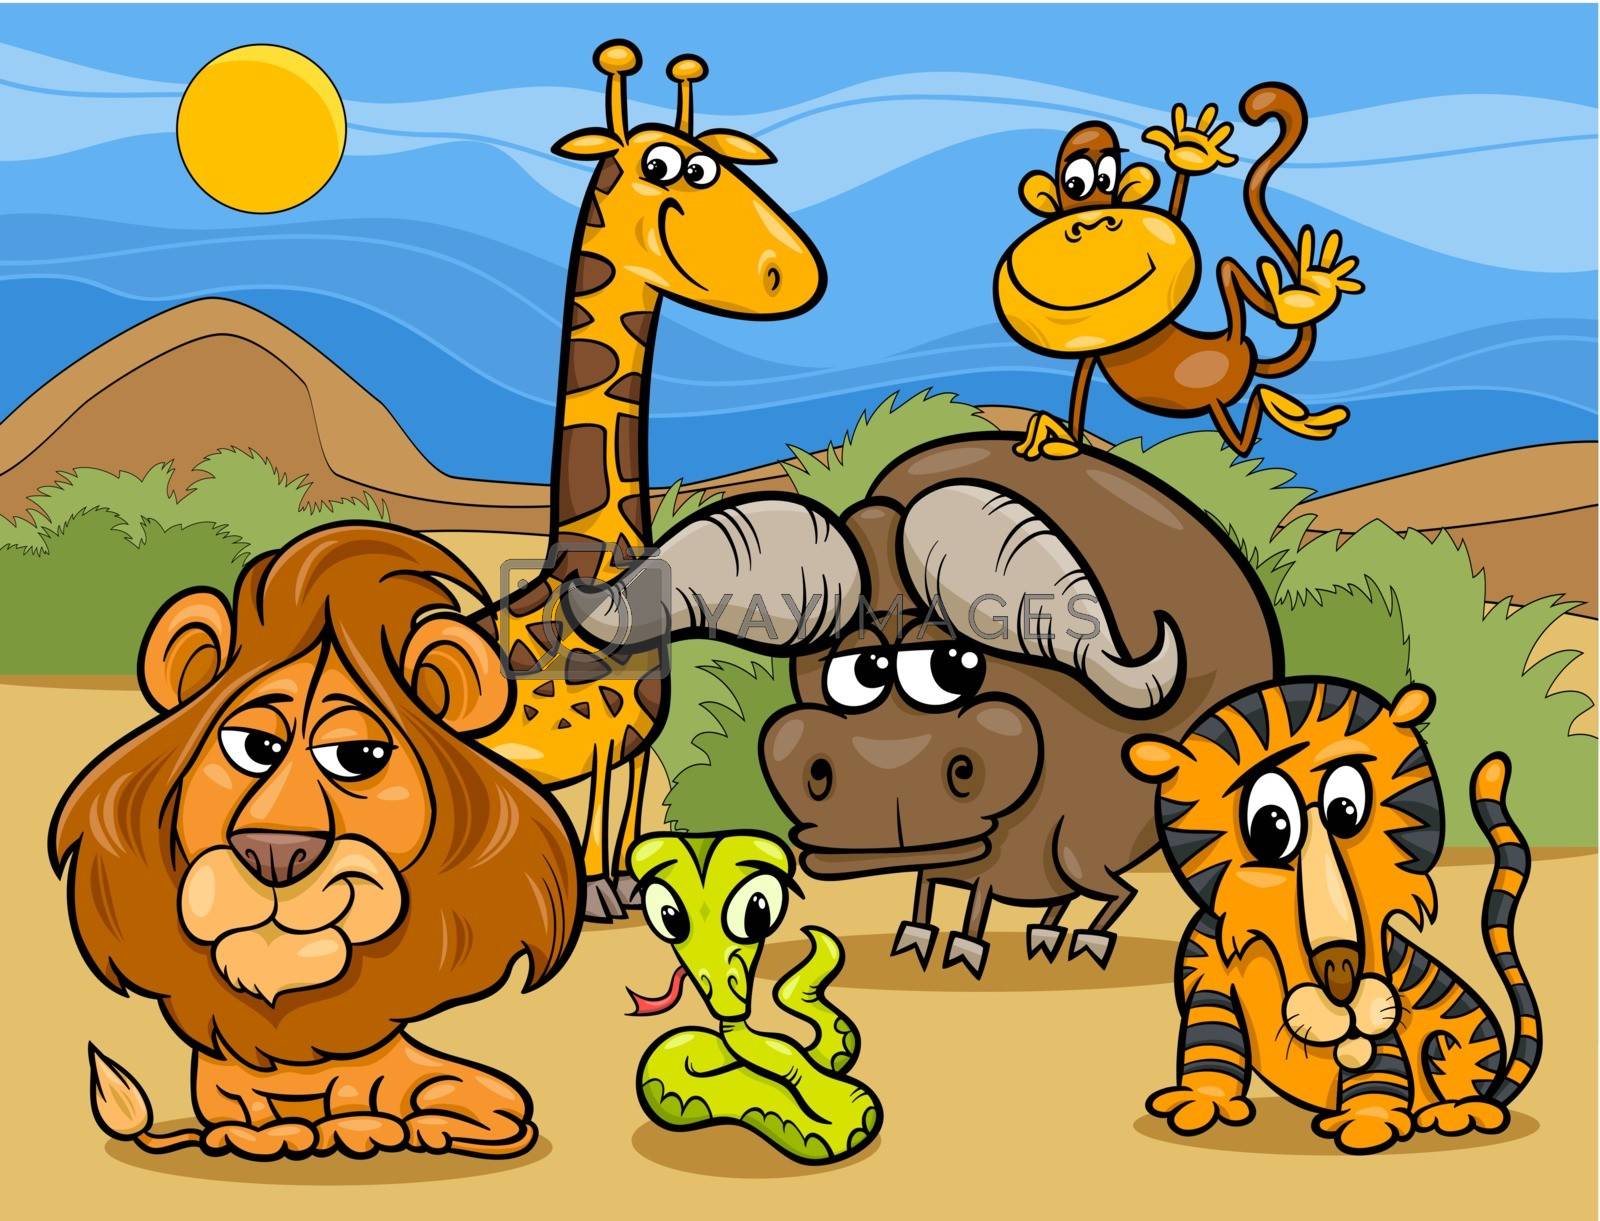 Royalty Free Vector | wild animals group cartoon illustration by izakowski